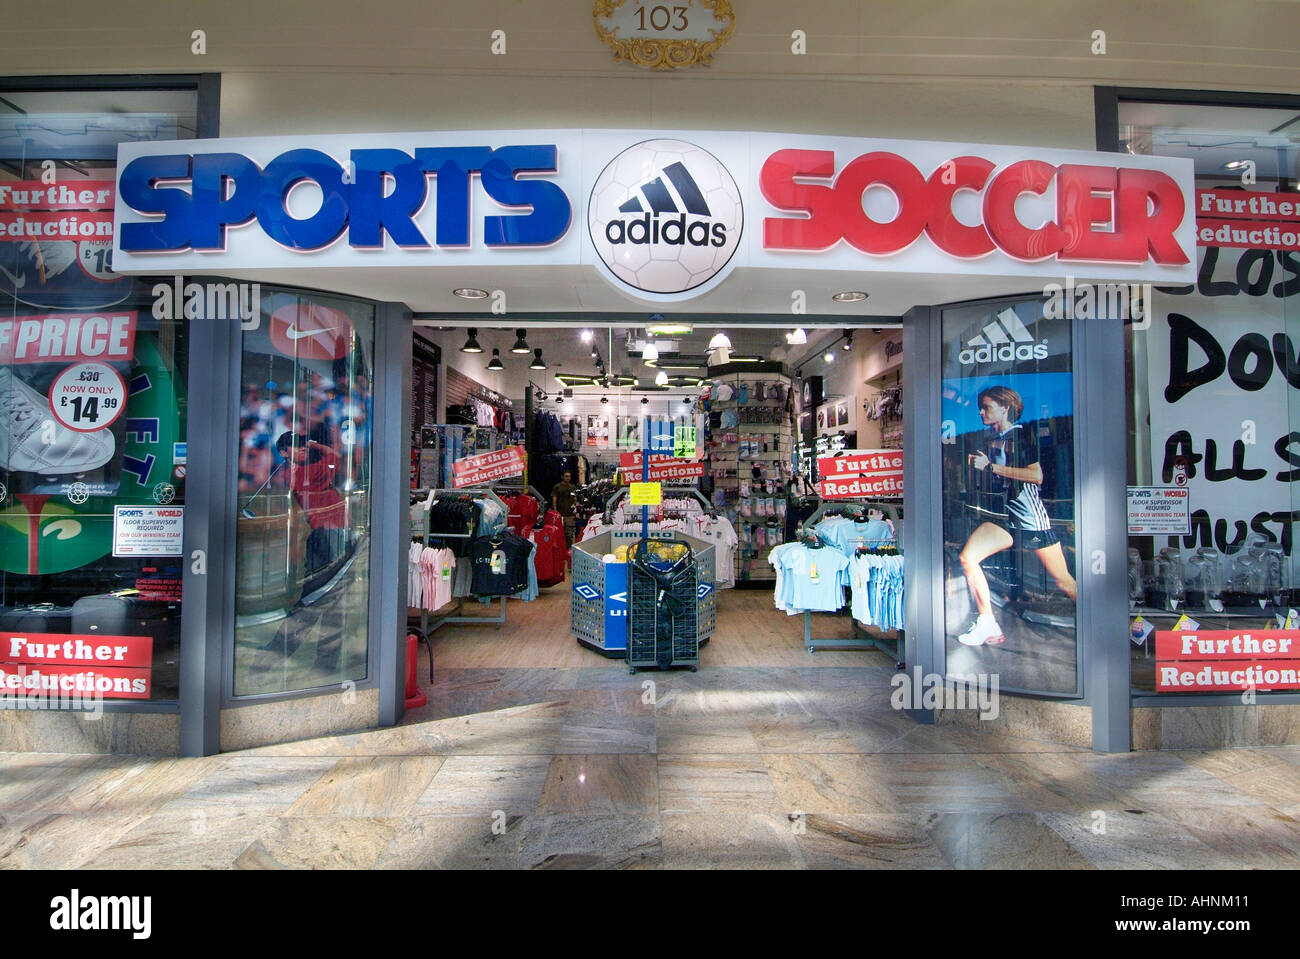 Sports soccer store retail store UK United Kingdom England Europe GB Great  Britain EU European Union Stock Photo - Alamy